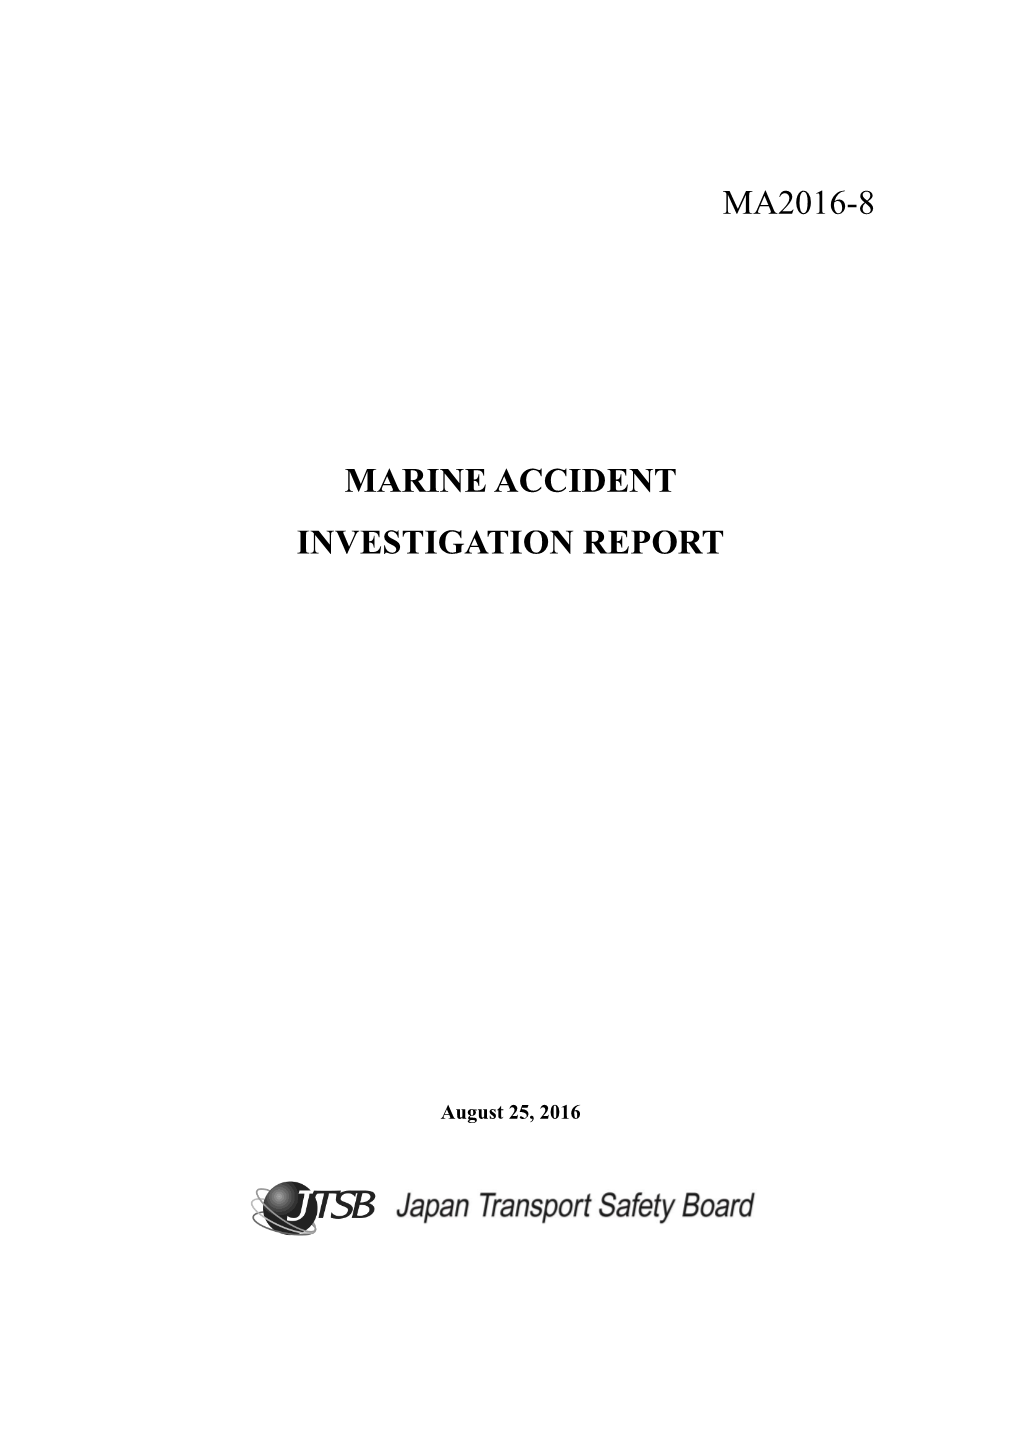 Ma2016-8 Marine Accident Investigation Report